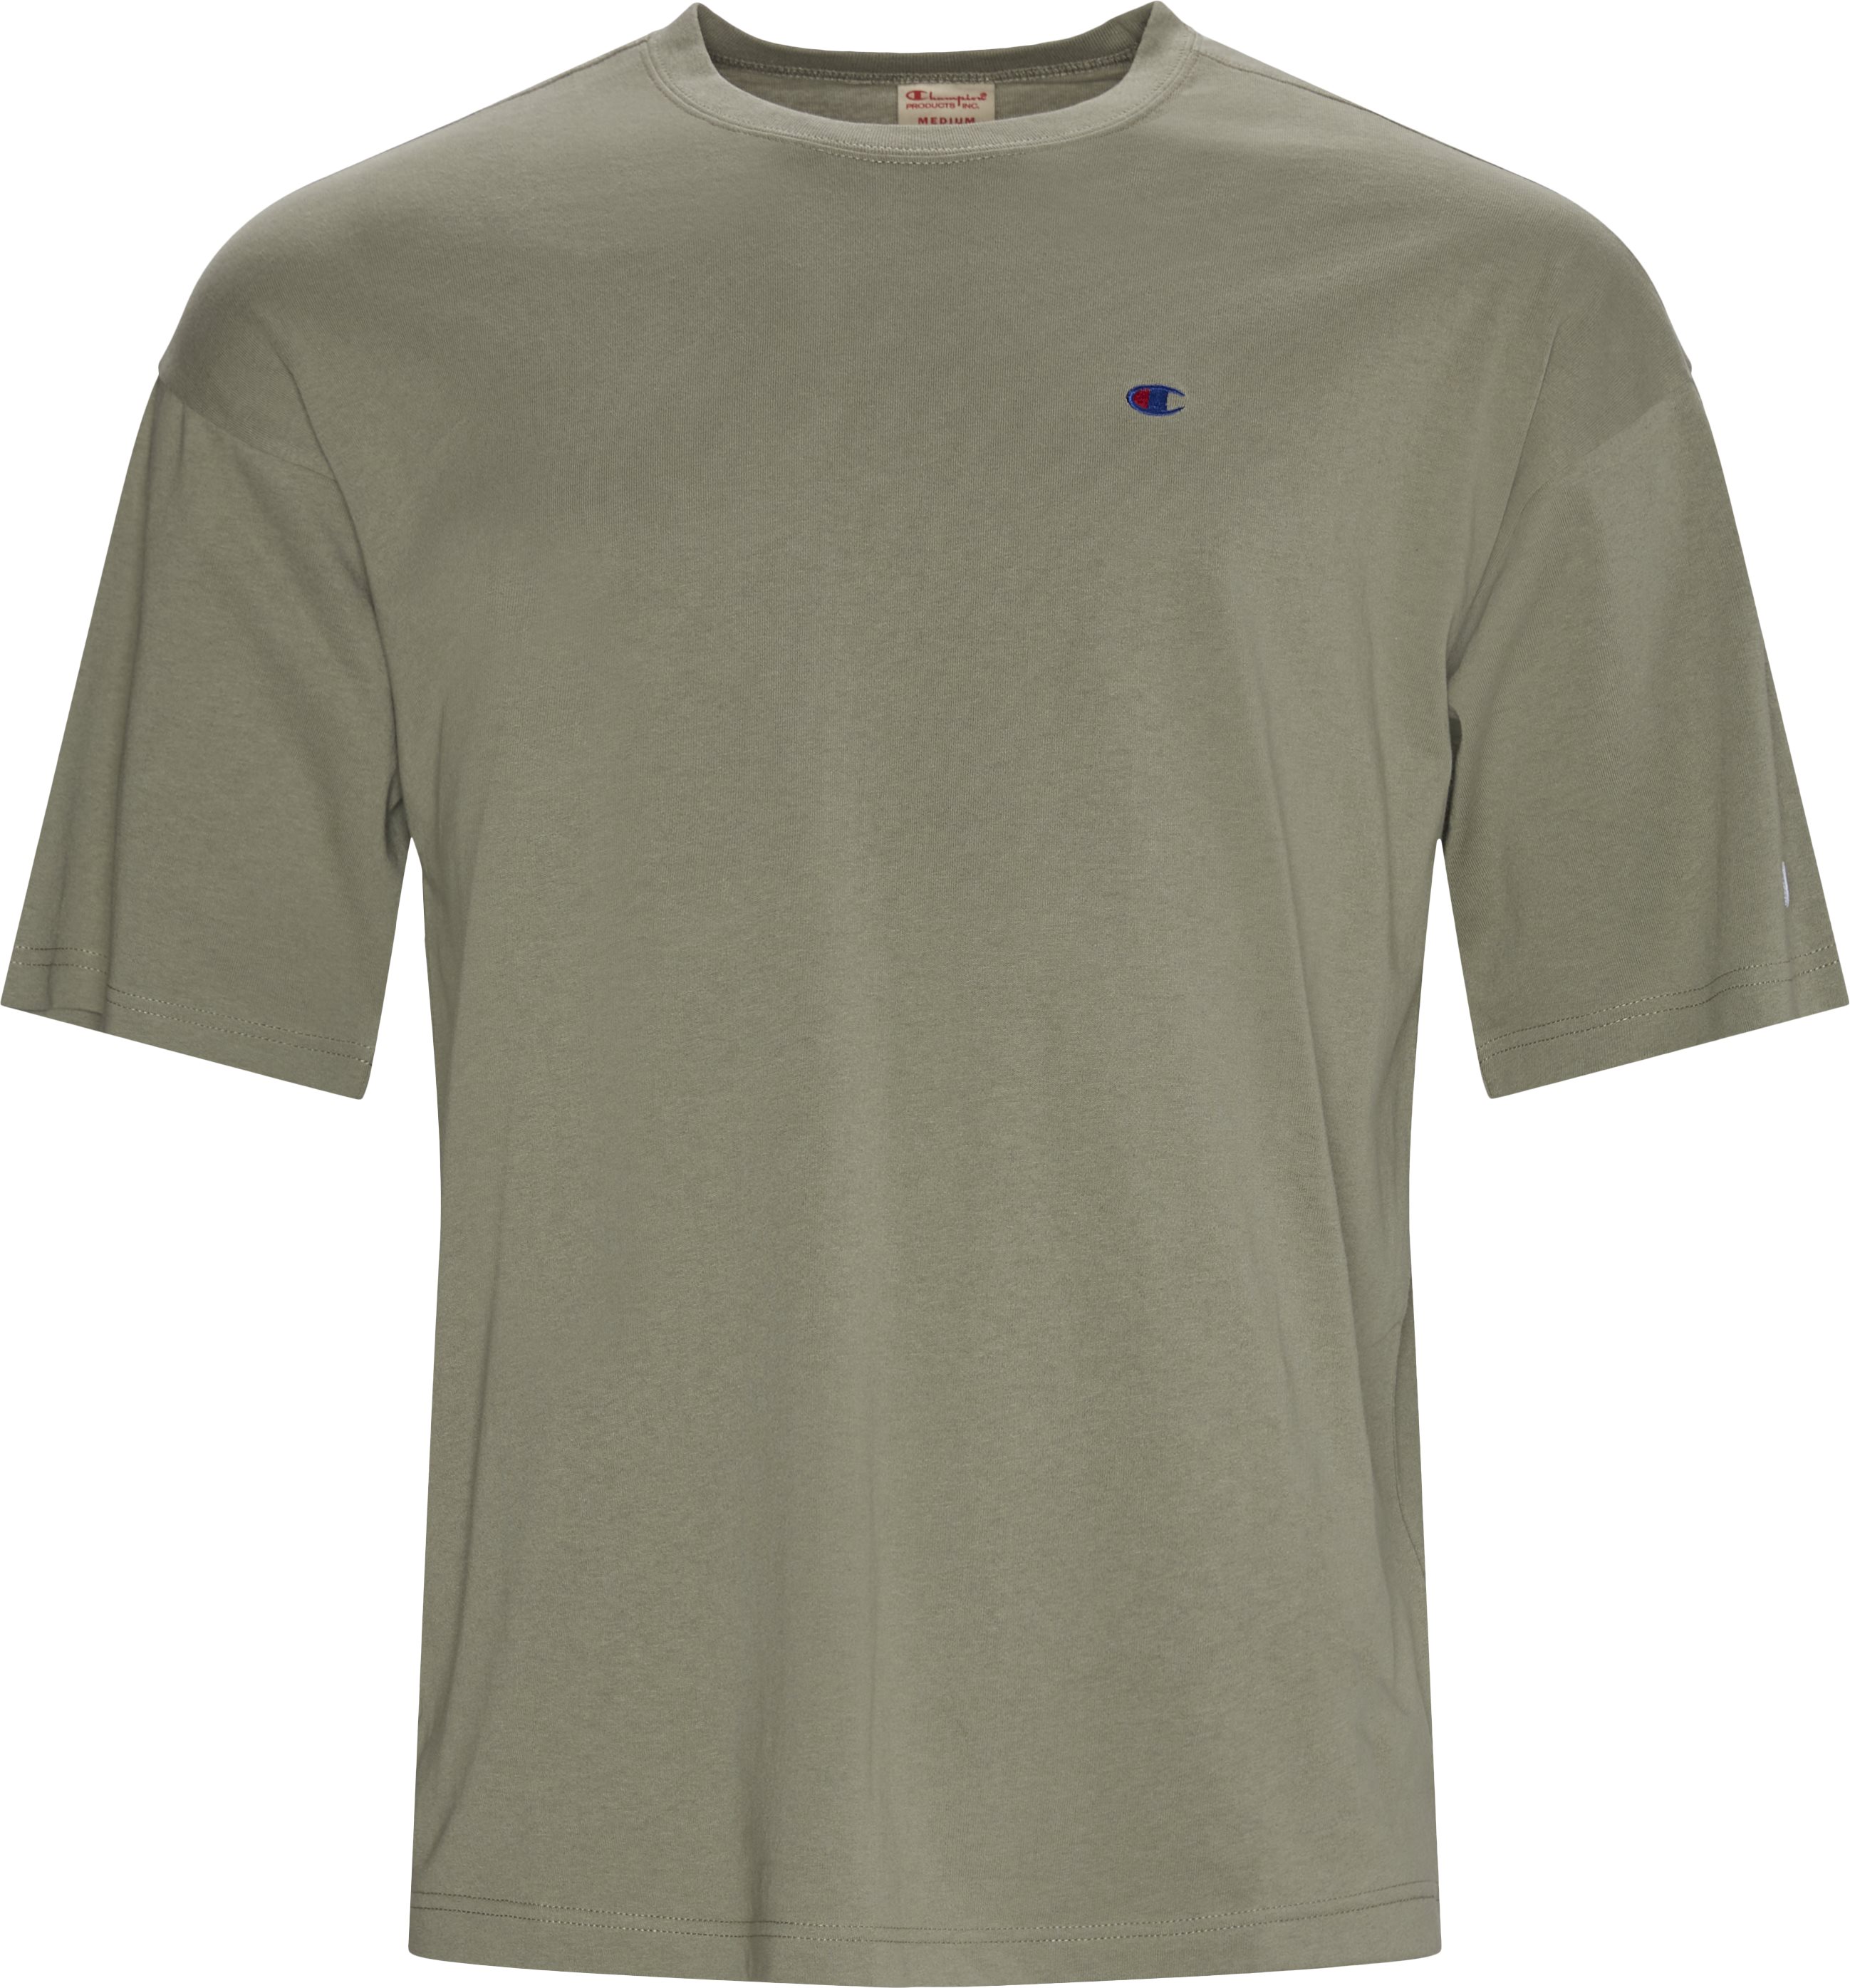 SHAPE Tee - T-shirts - Regular fit - Green